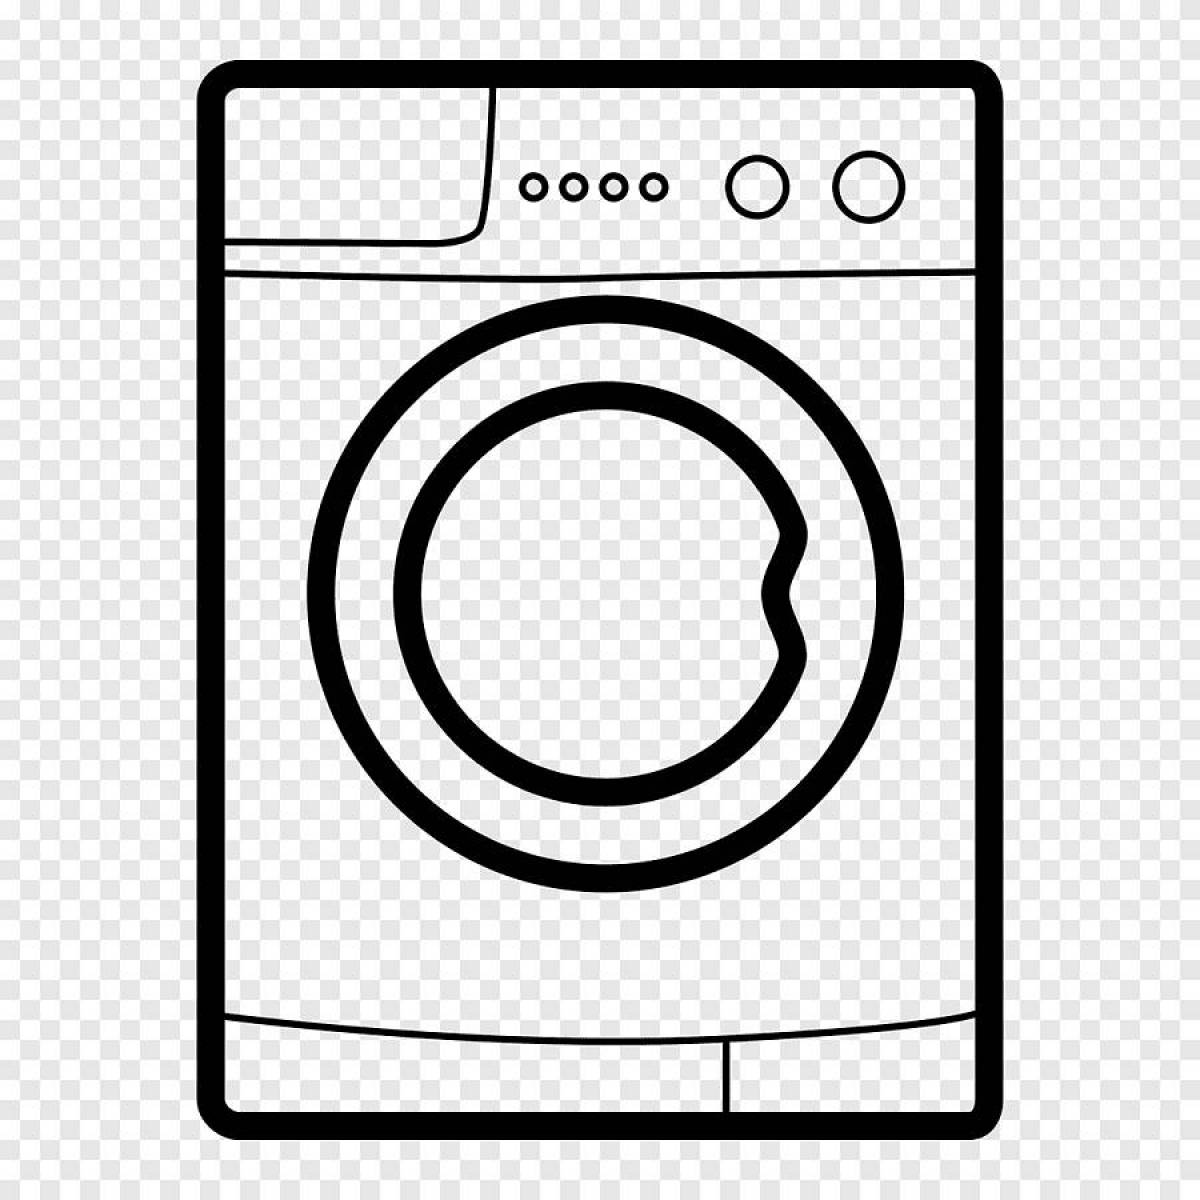 Magic washing machine coloring page